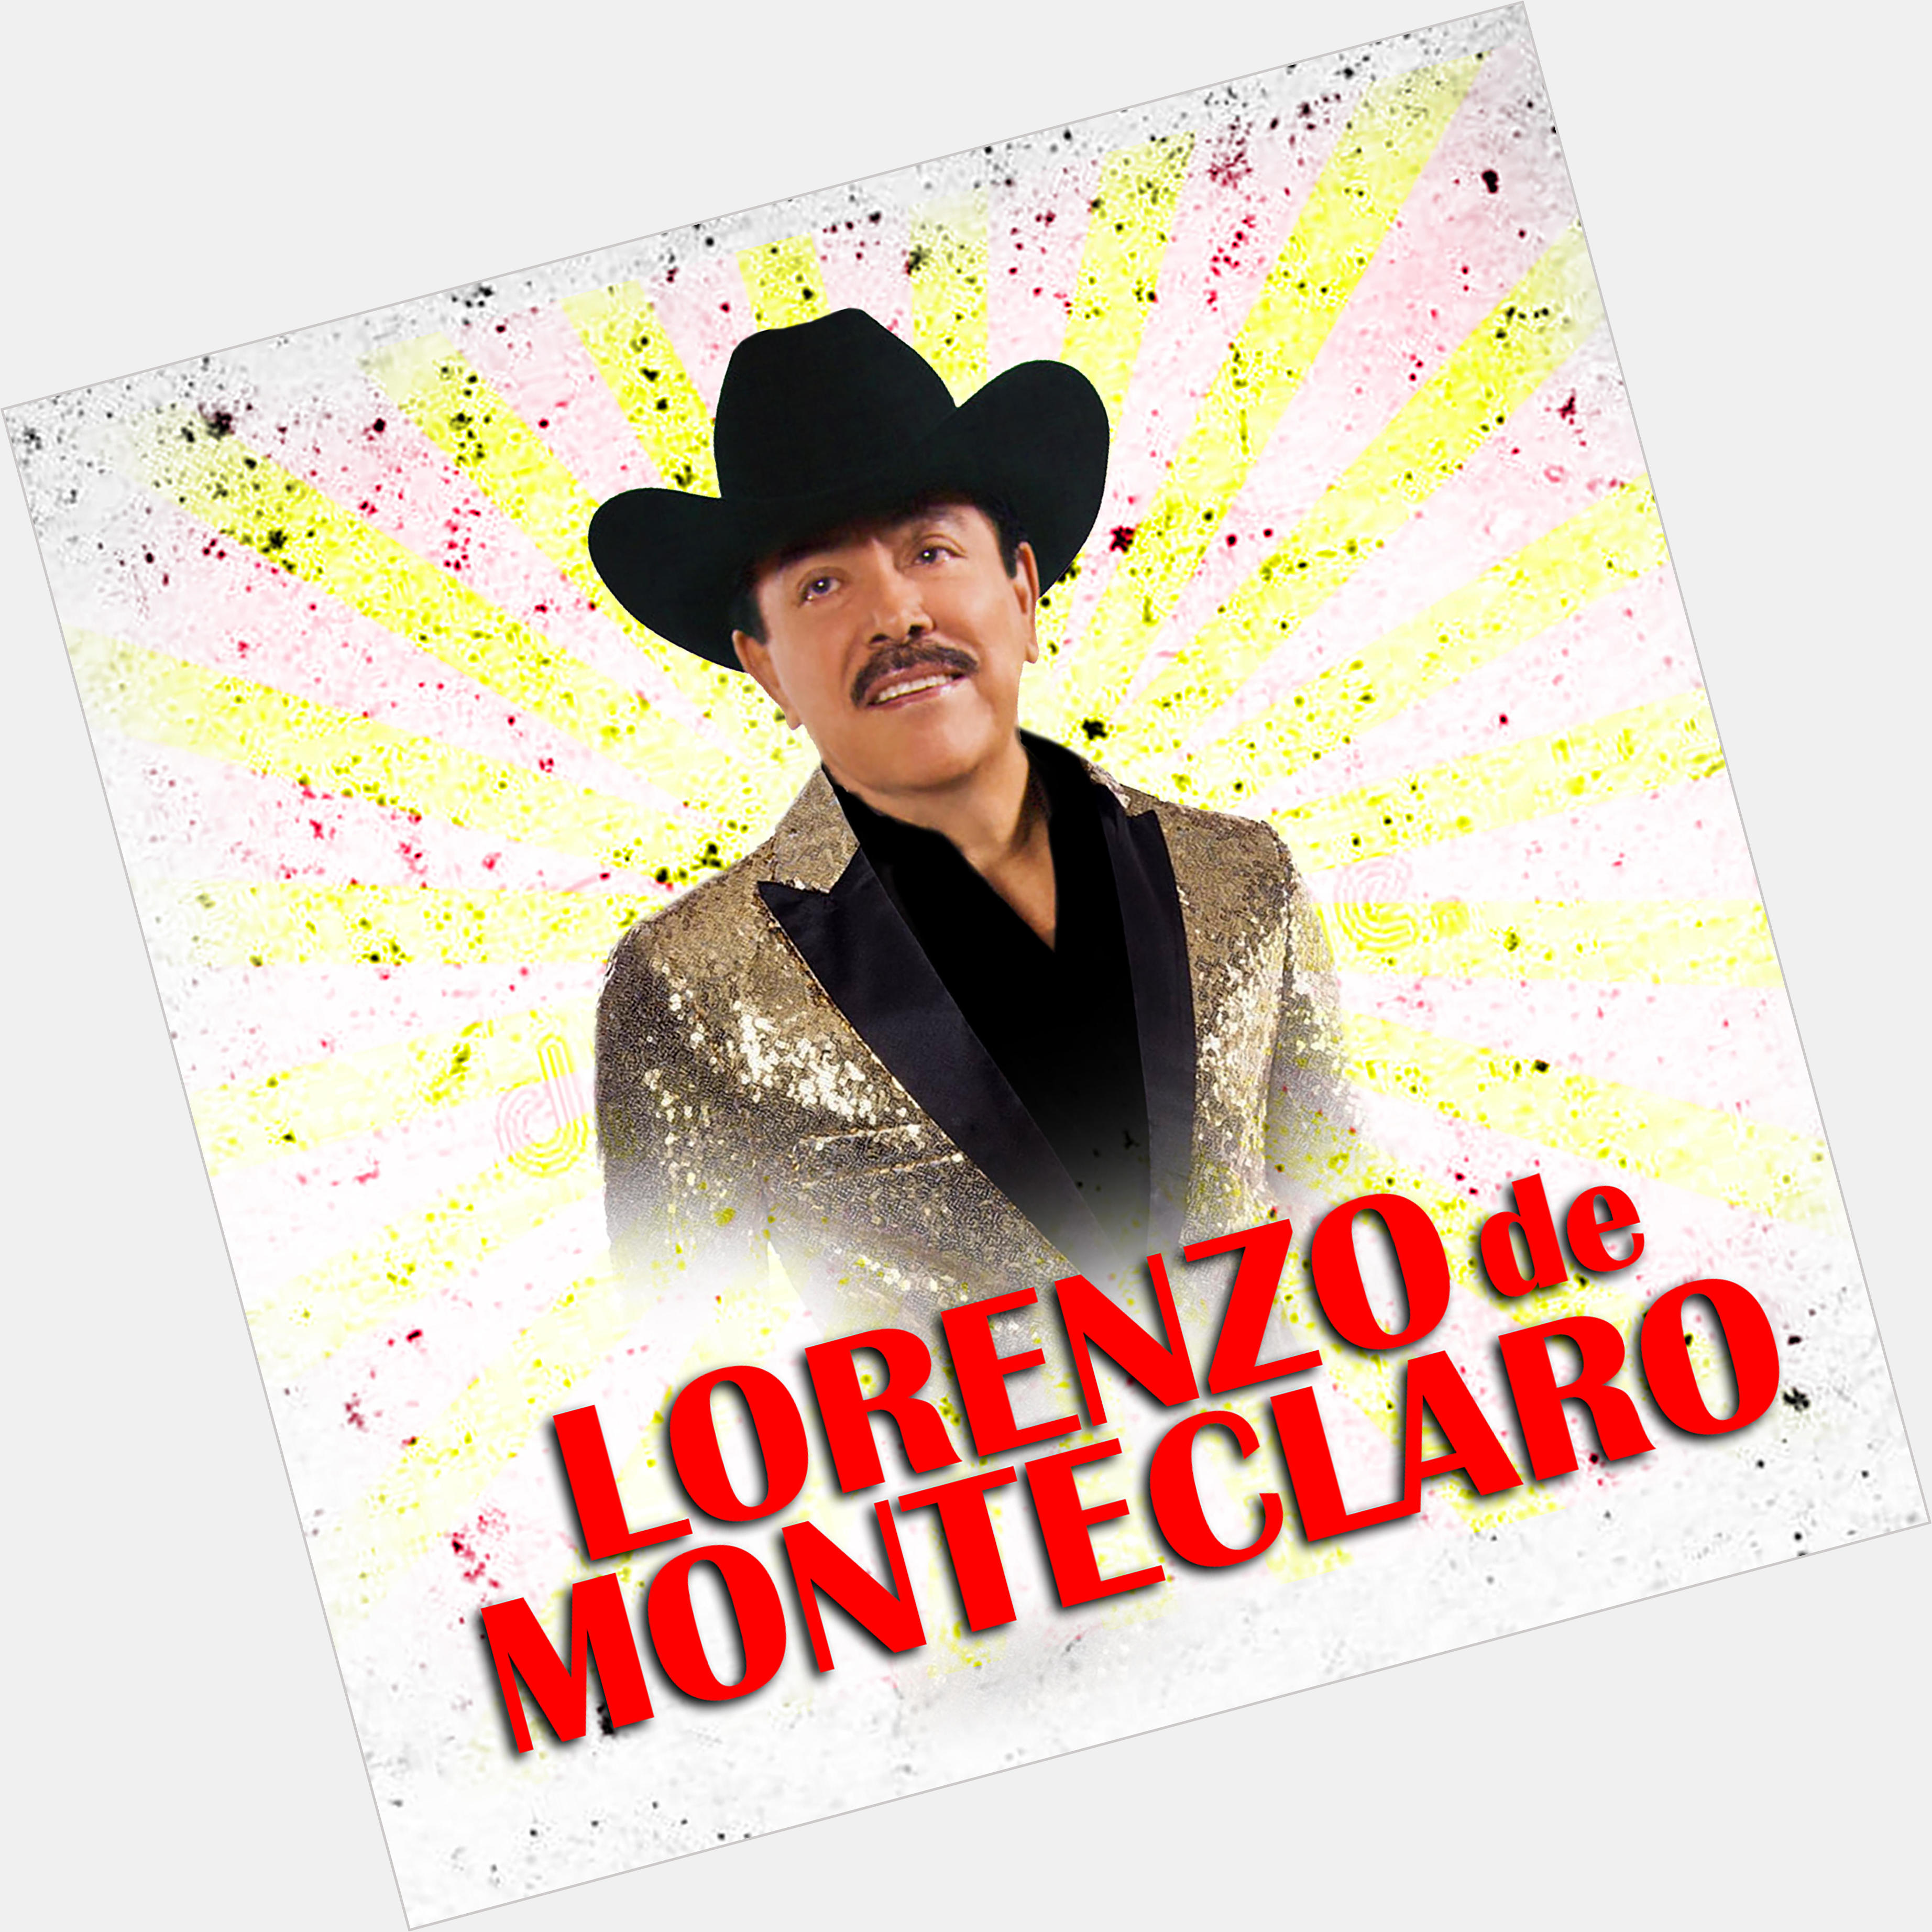 Lorenzo De Monteclaro  